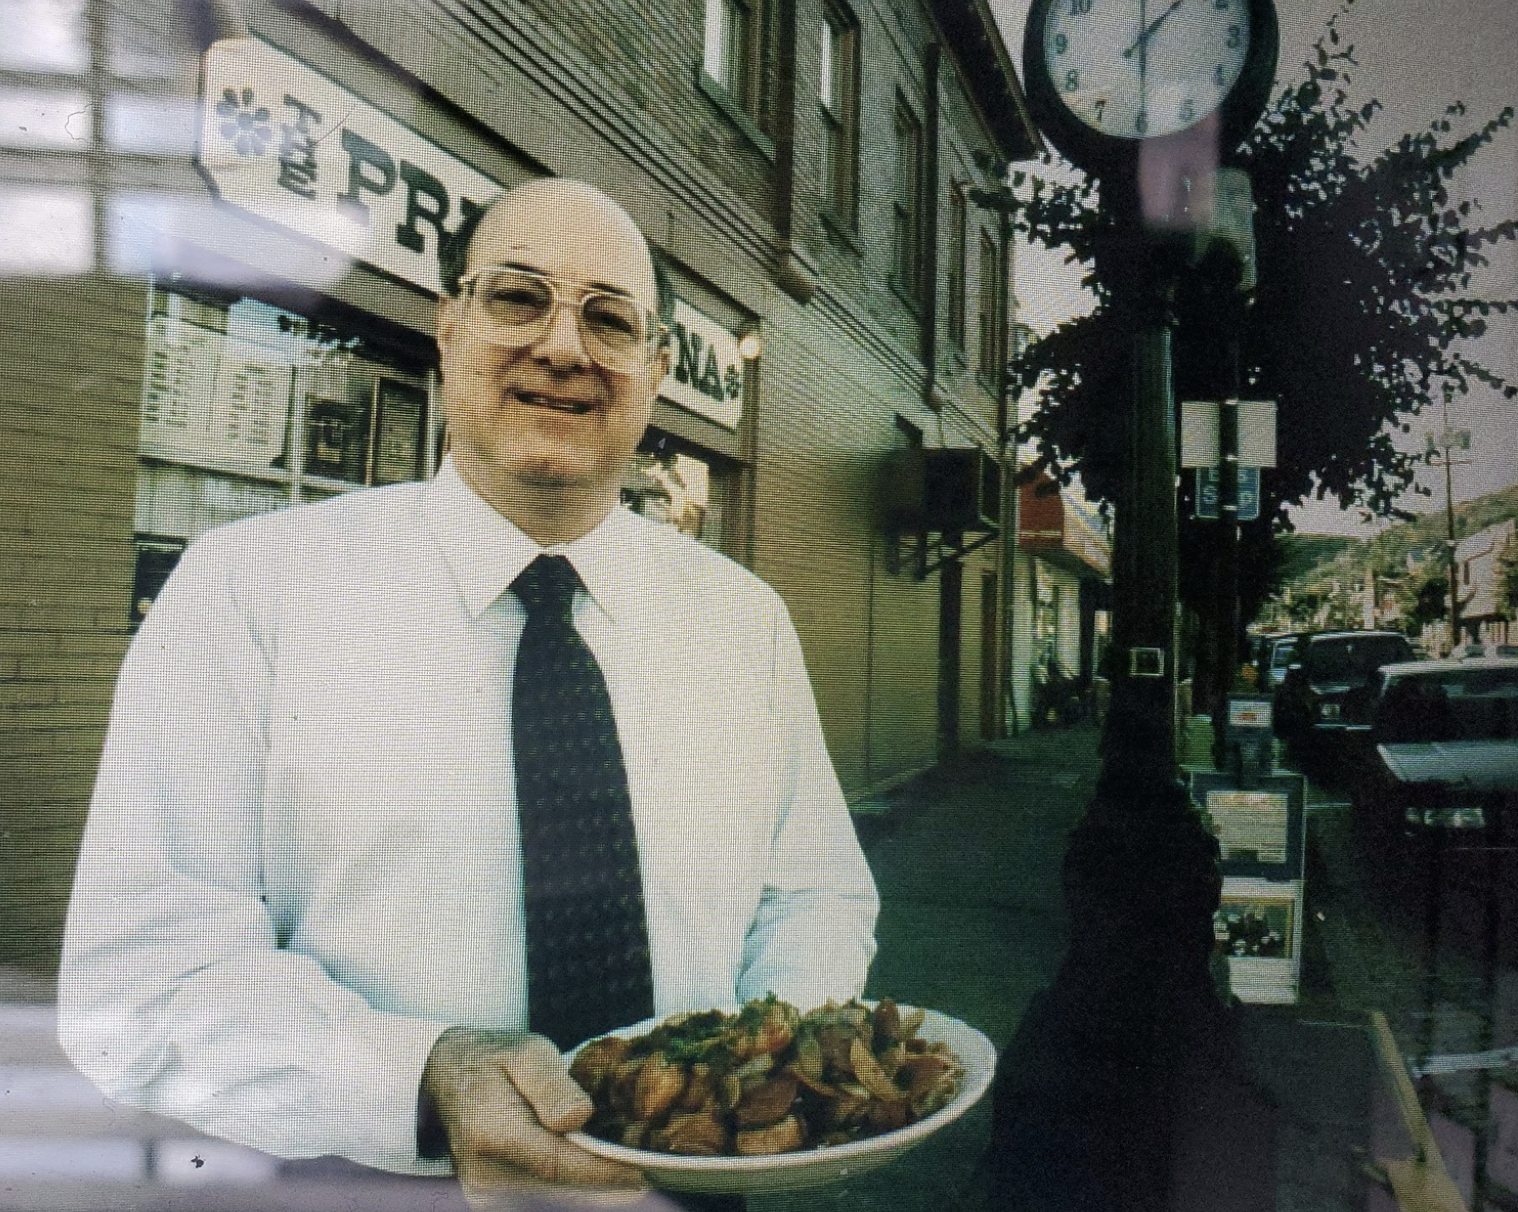 Legendary Restauranteur Joseph Costanzo Jr. Reveals all in Fine Dining Memoir "On The Rocks"